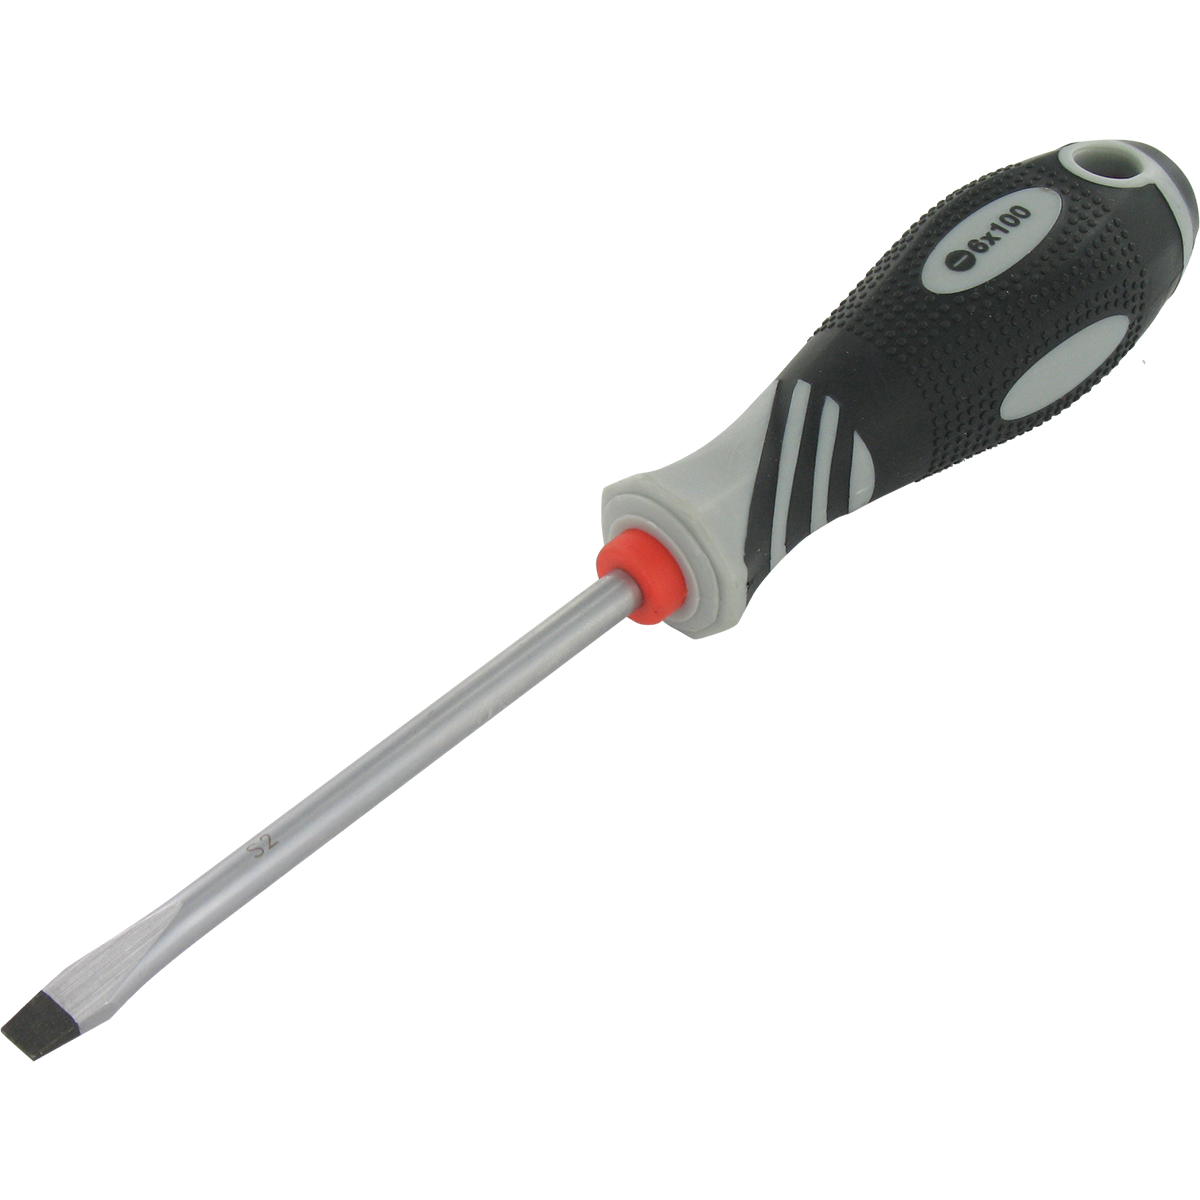 Professional screwdriver - 6mm flat blade